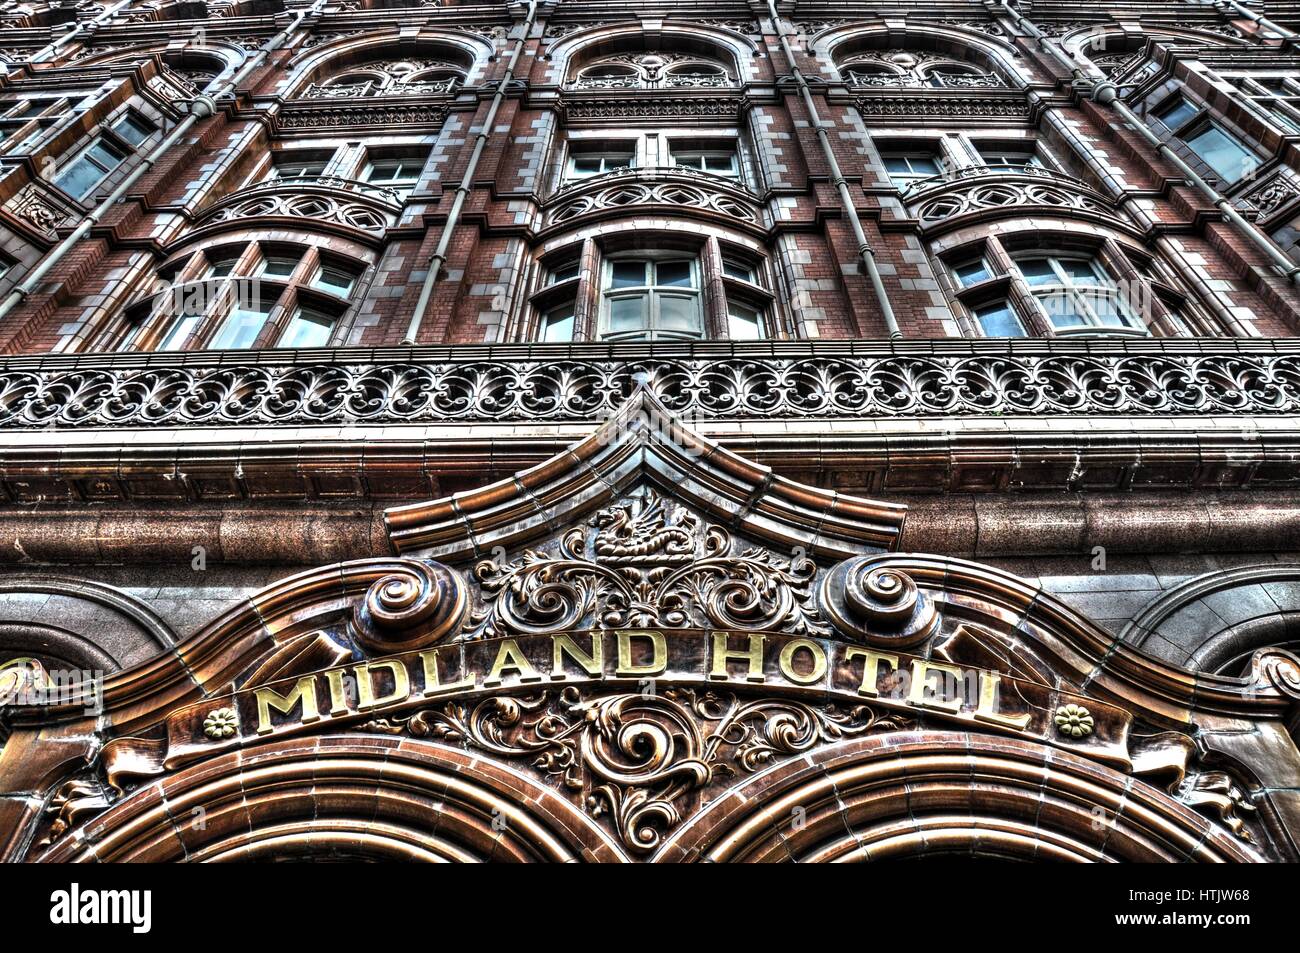 Midland Hotel, Manchester, England Stock Photo